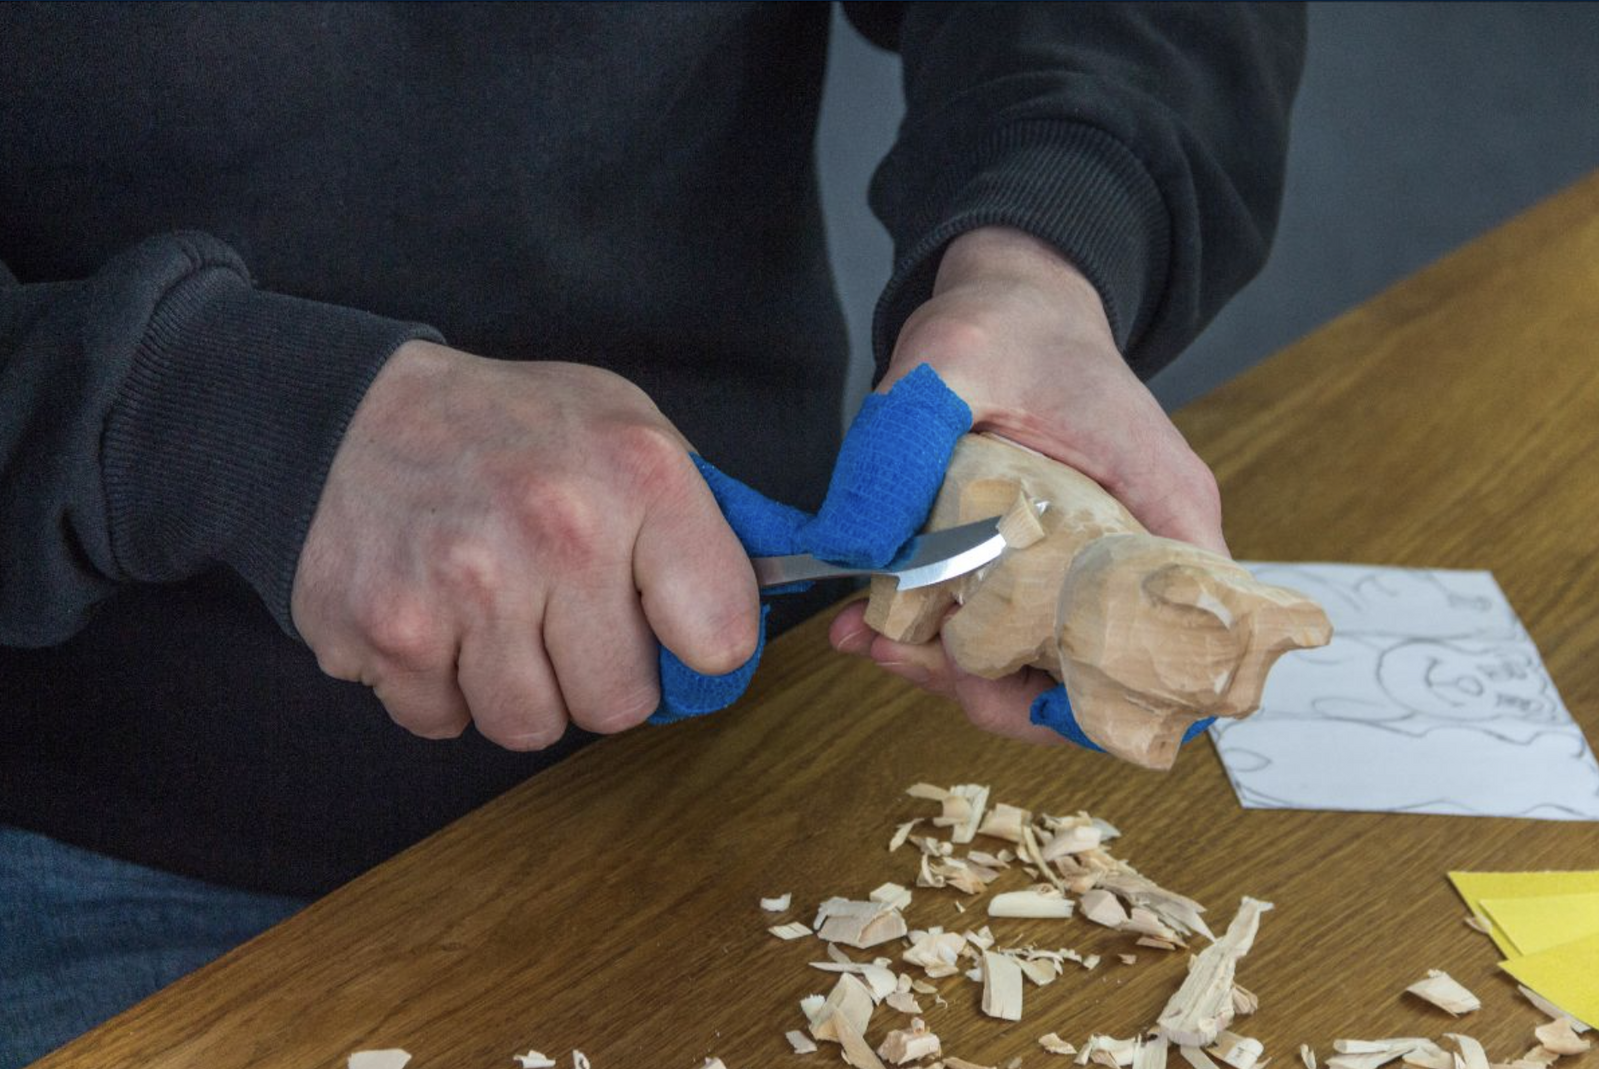 Beavercraft Diy03 - Wizard Carving Hobby-kit